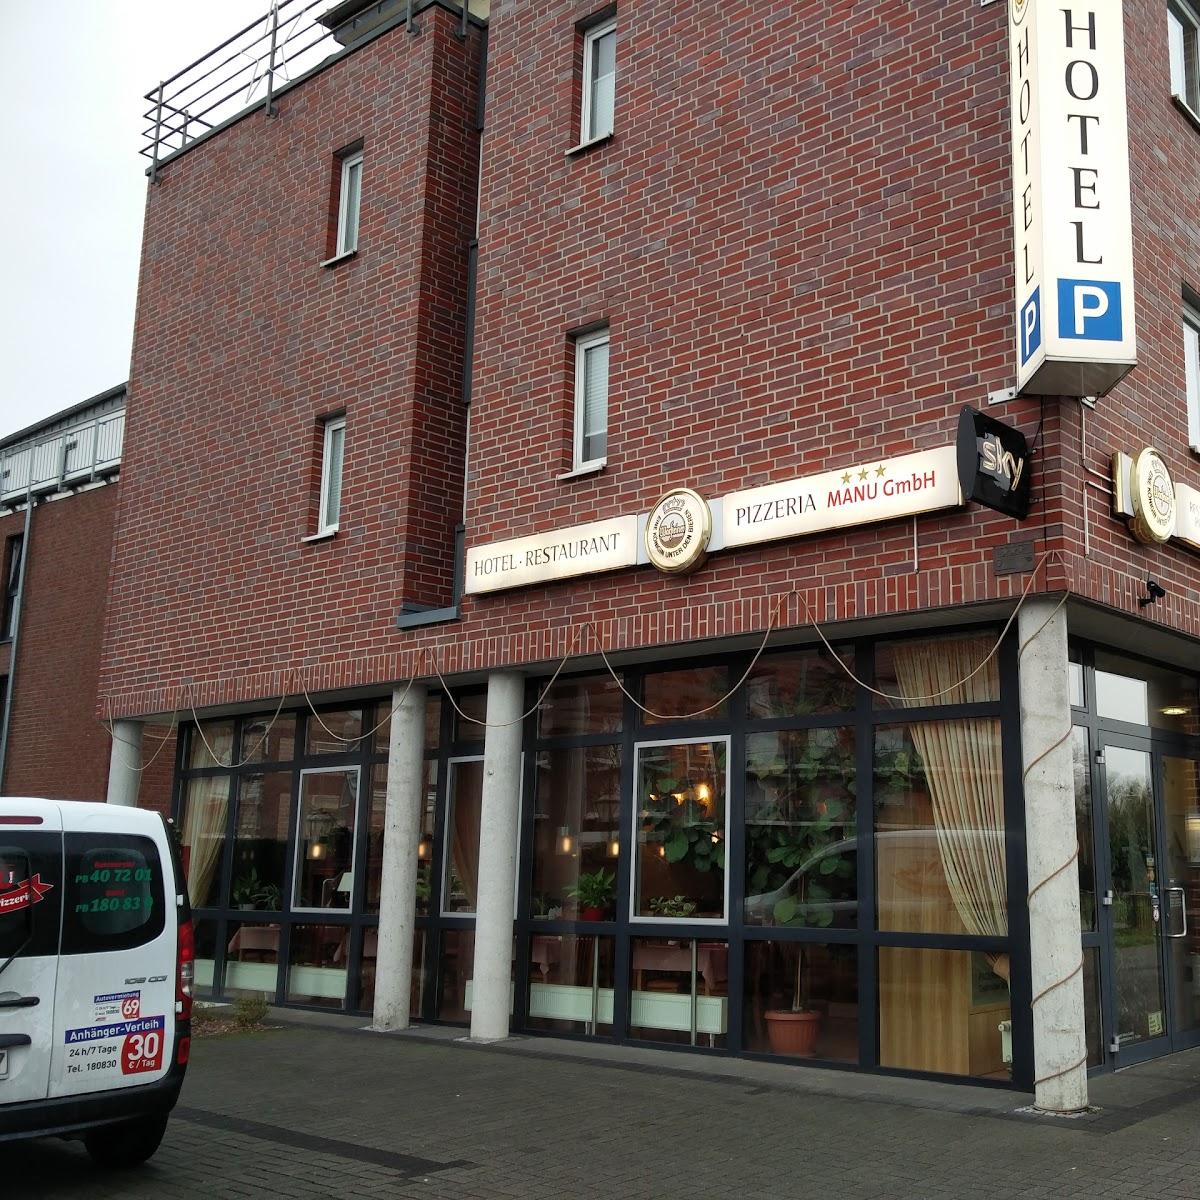 Restaurant "Hotel Manu" in Paderborn